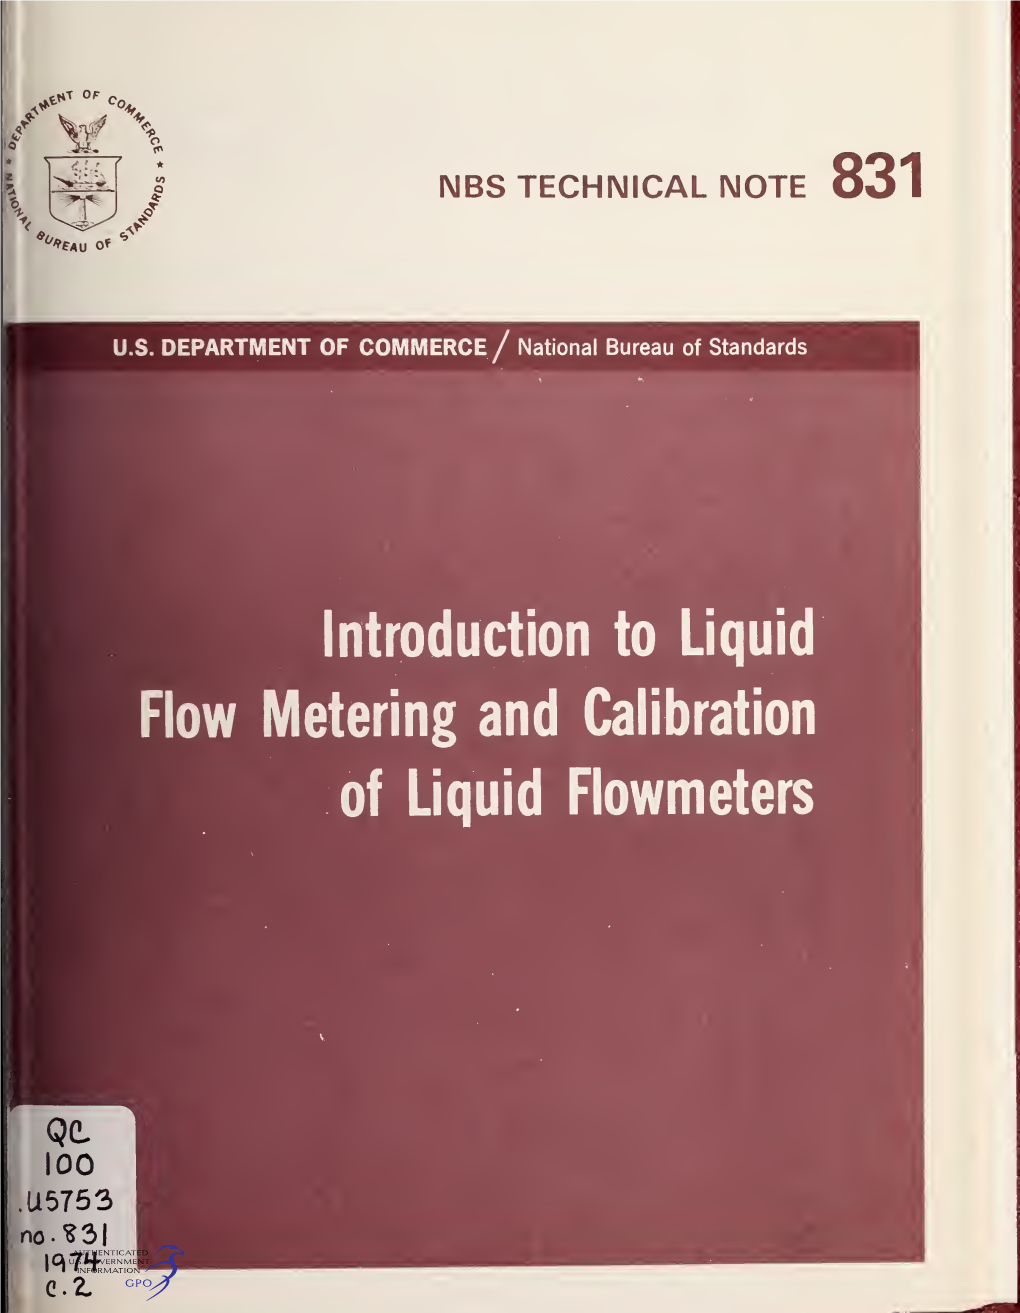 Introduction to Liquid Flow Metering and Calibration of Liquid Flowmeters